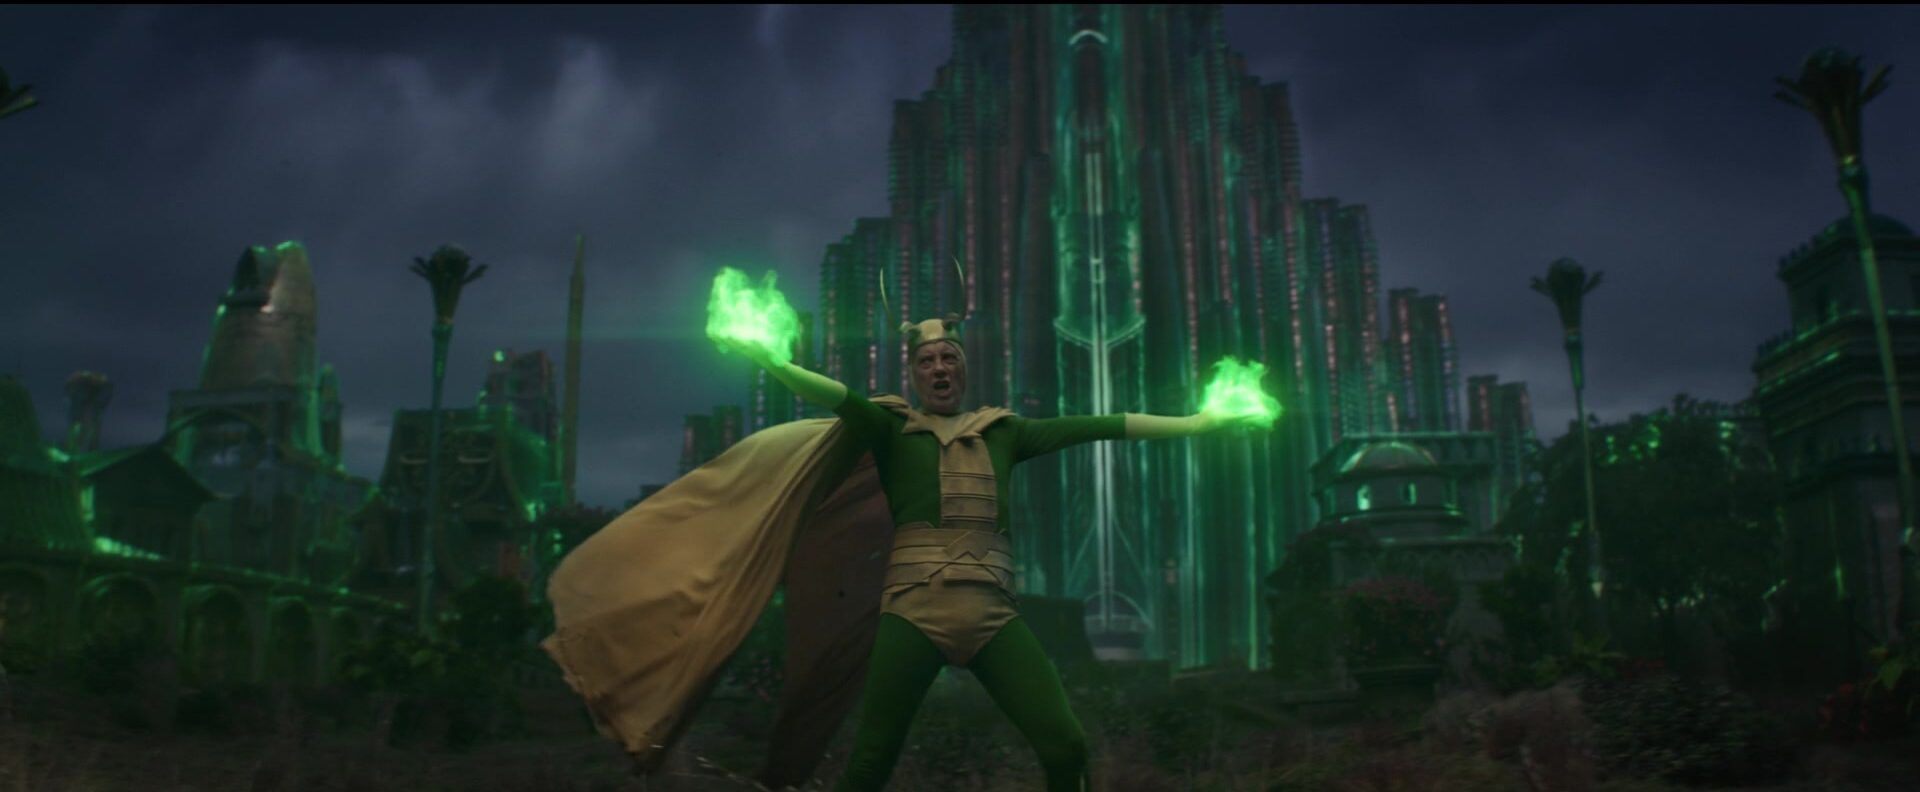 Classic Loki (Richard E. Grant) unleashes his Asgardian magics in Loki Season 1 Episode 5 "Journey Into Mystery", Marvel Entertainment